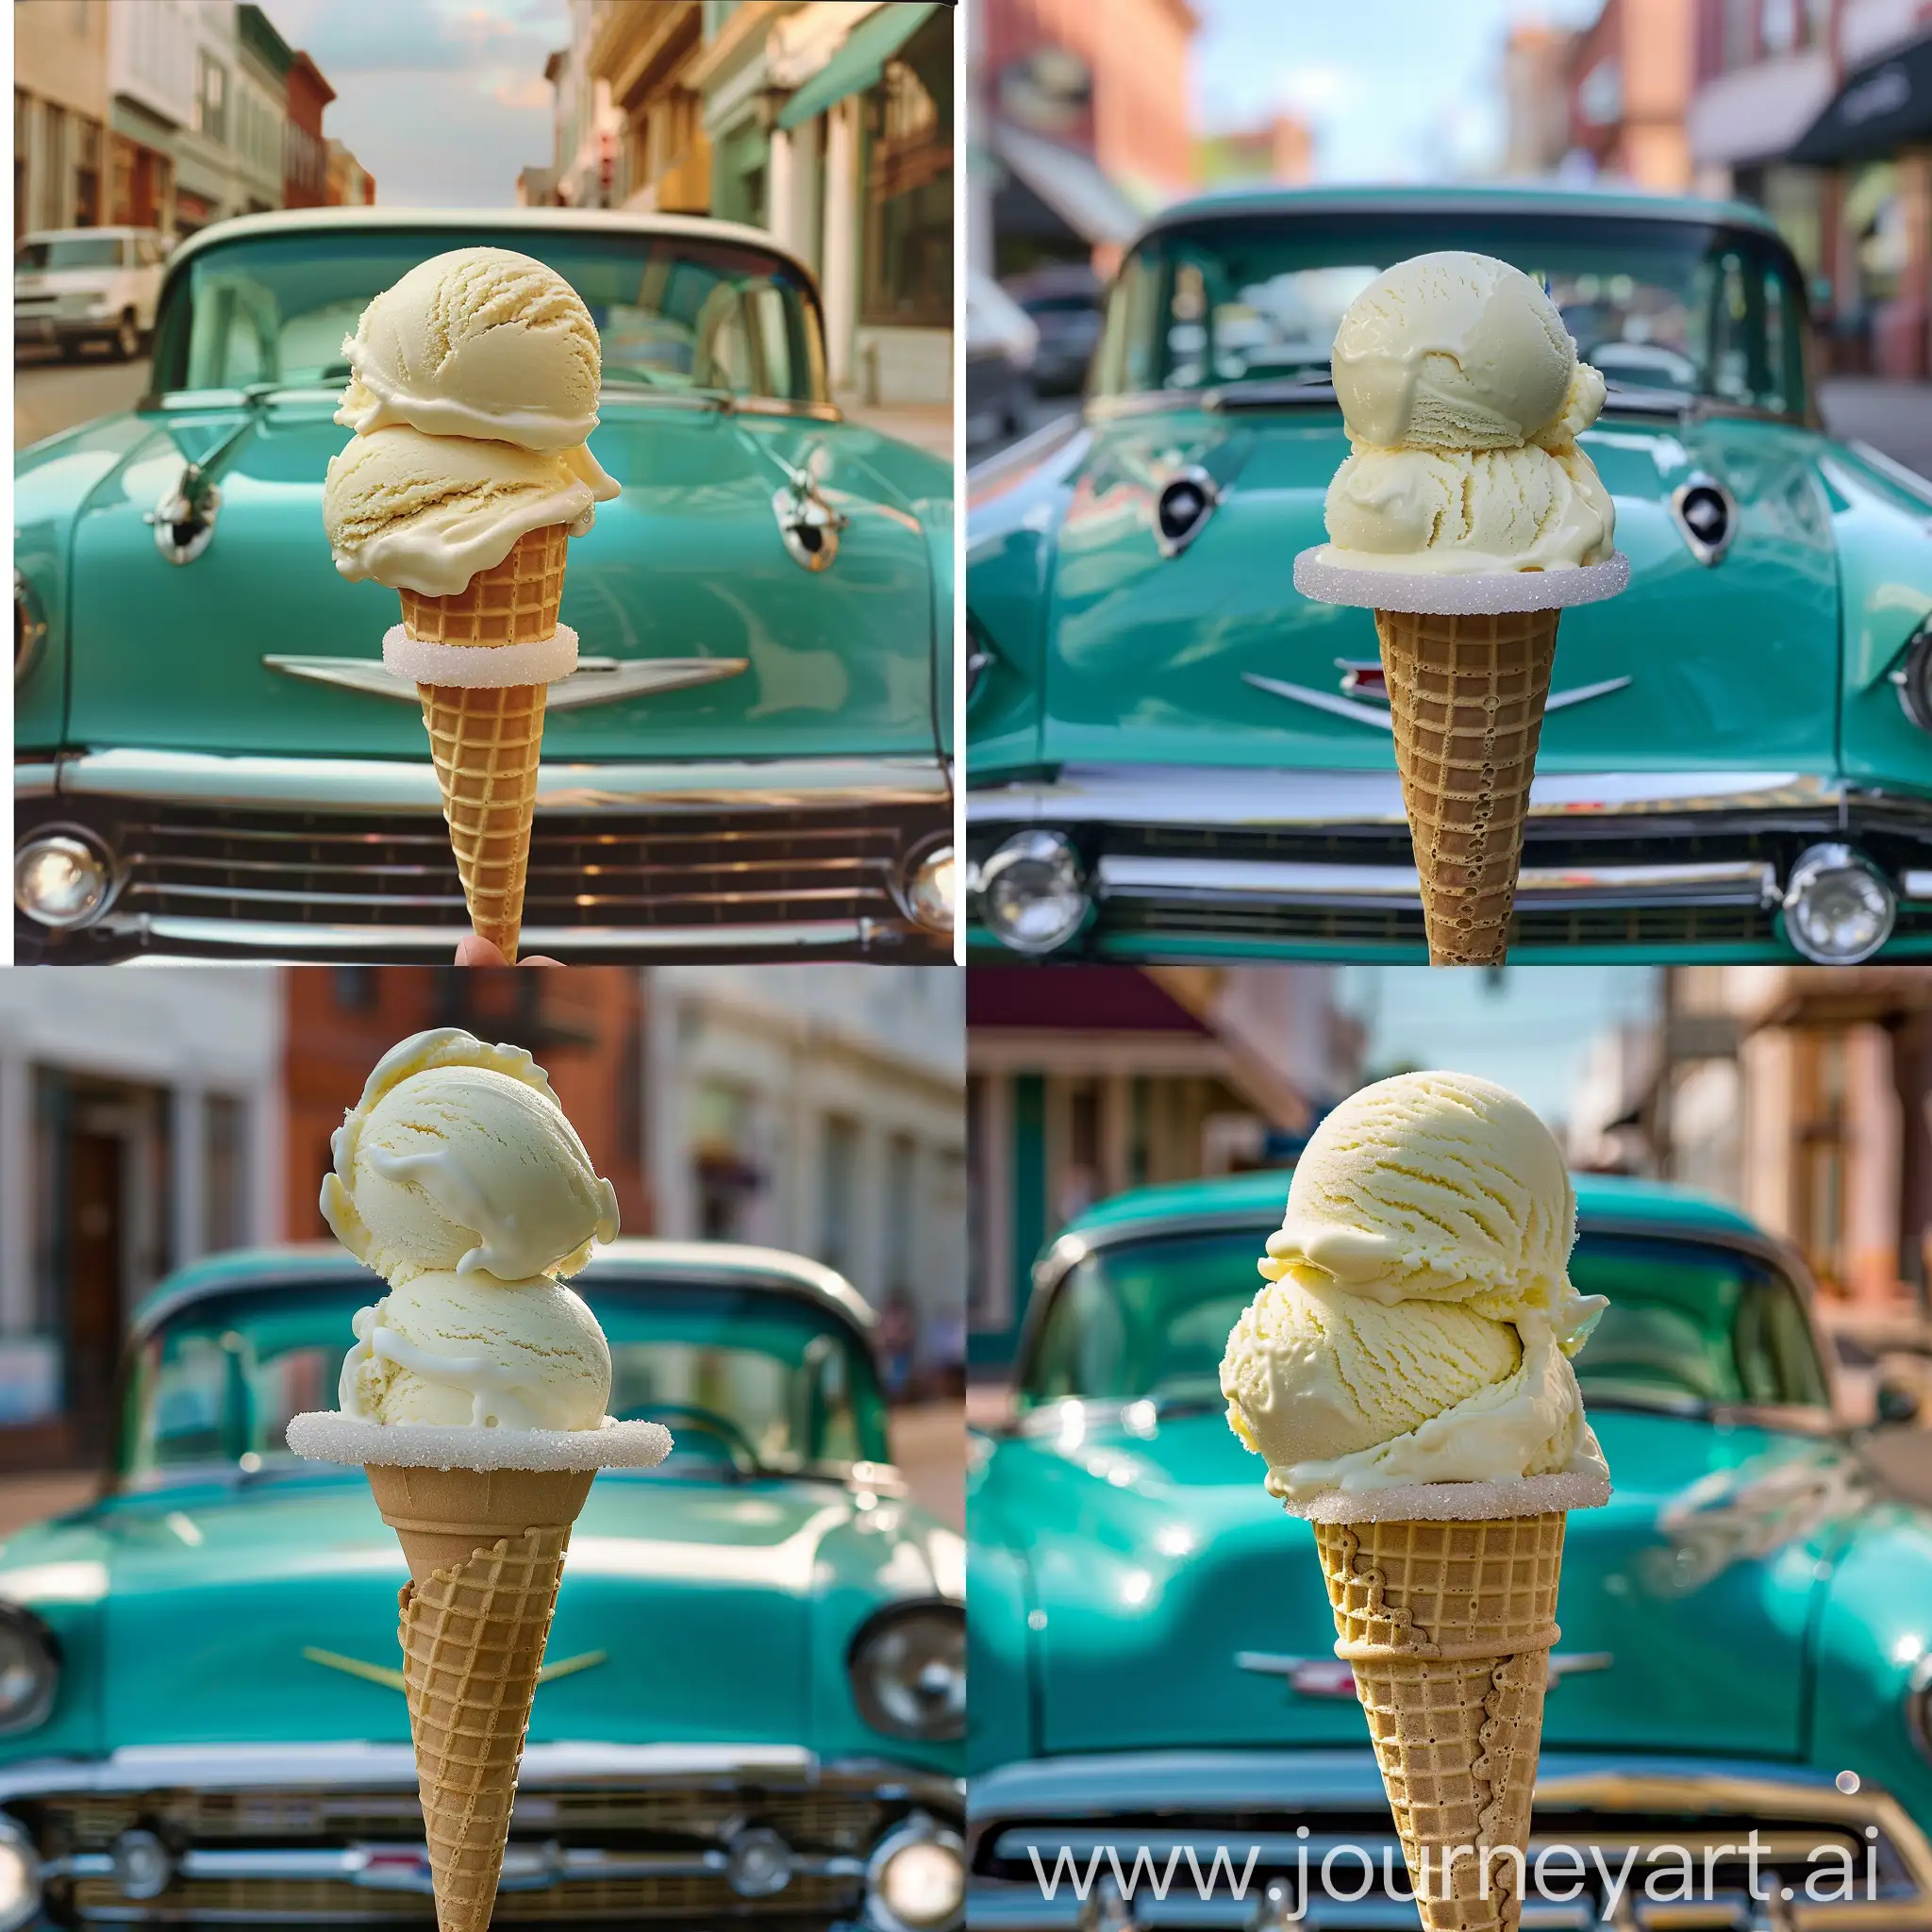 Vintage-Car-with-Vanilla-Ice-Cream-Cone-Nostalgic-Indulgence-in-Classic-Setting